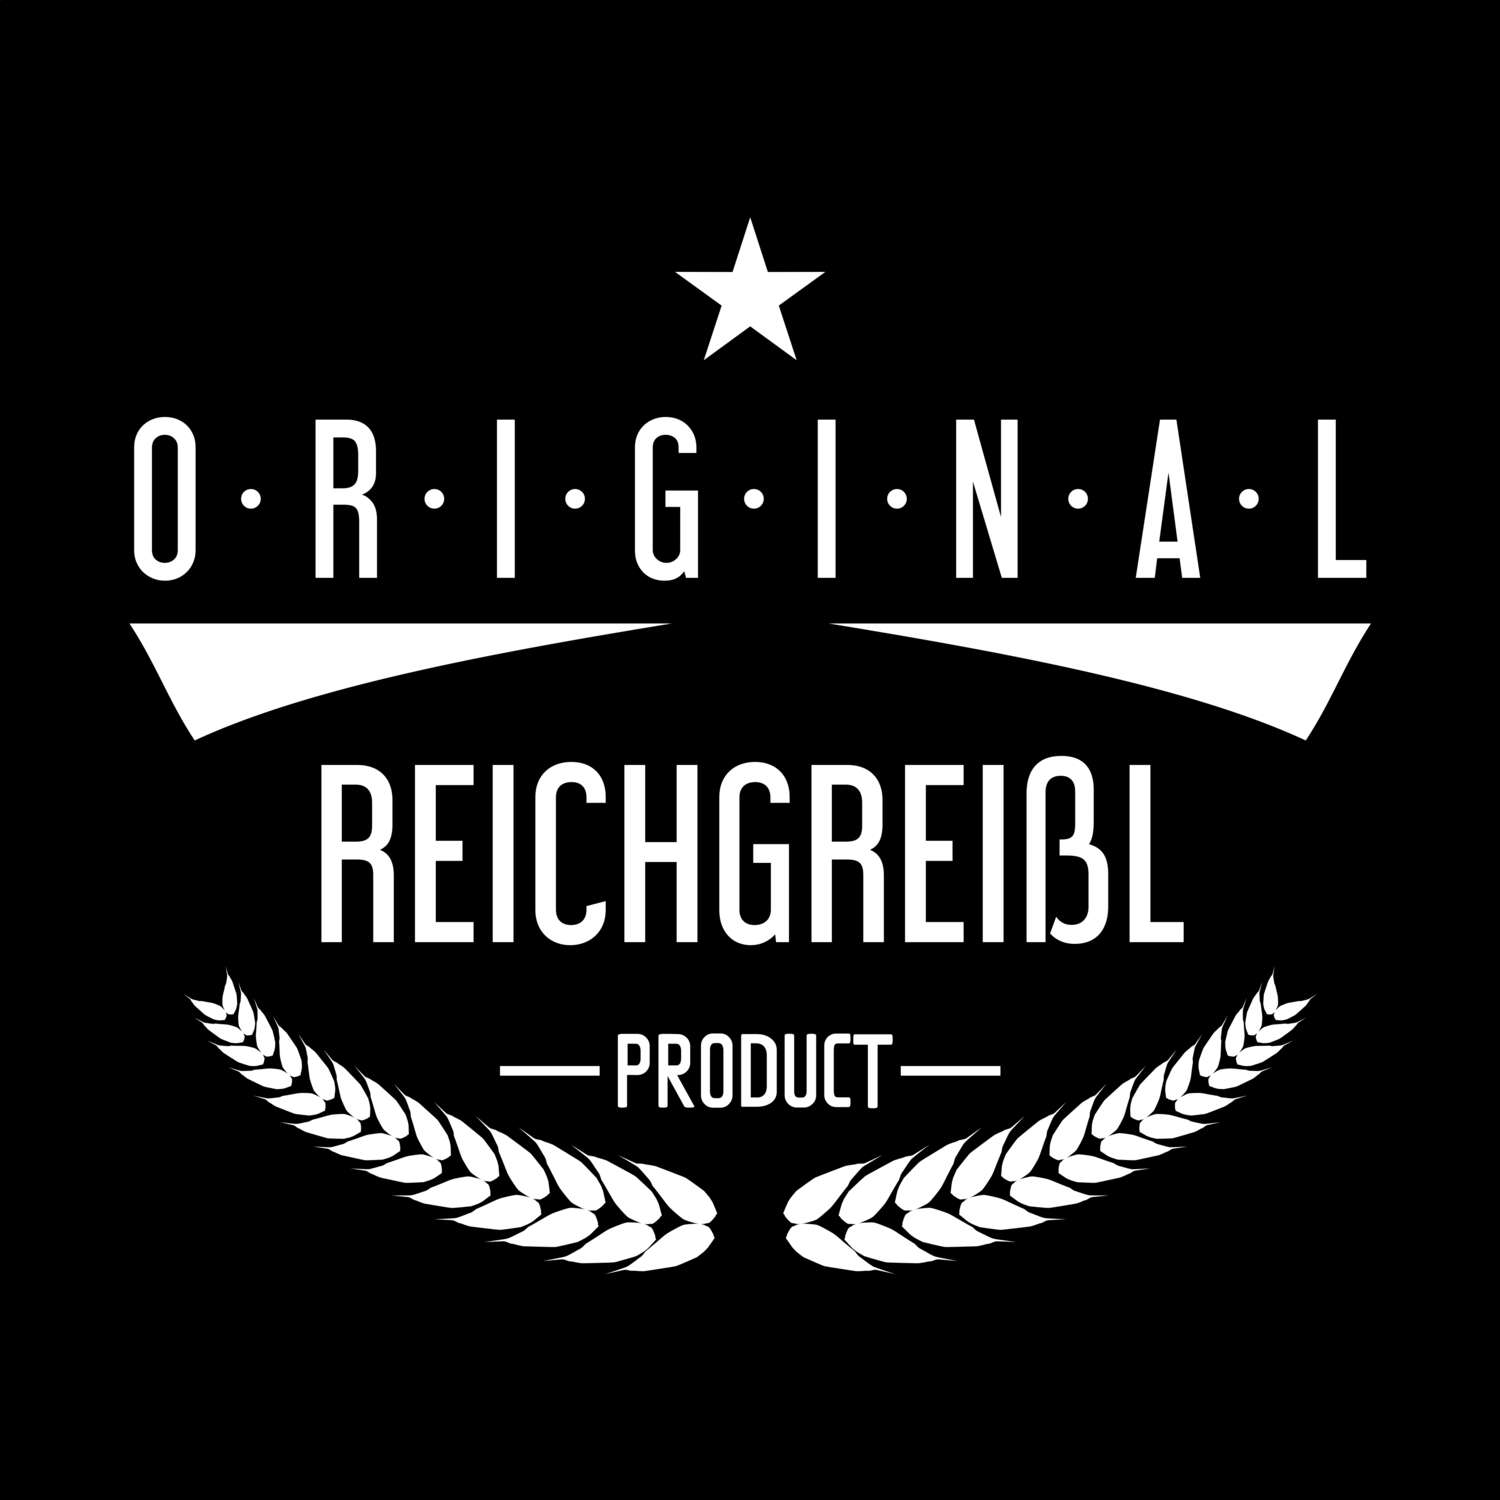 Reichgreißl T-Shirt »Original Product«